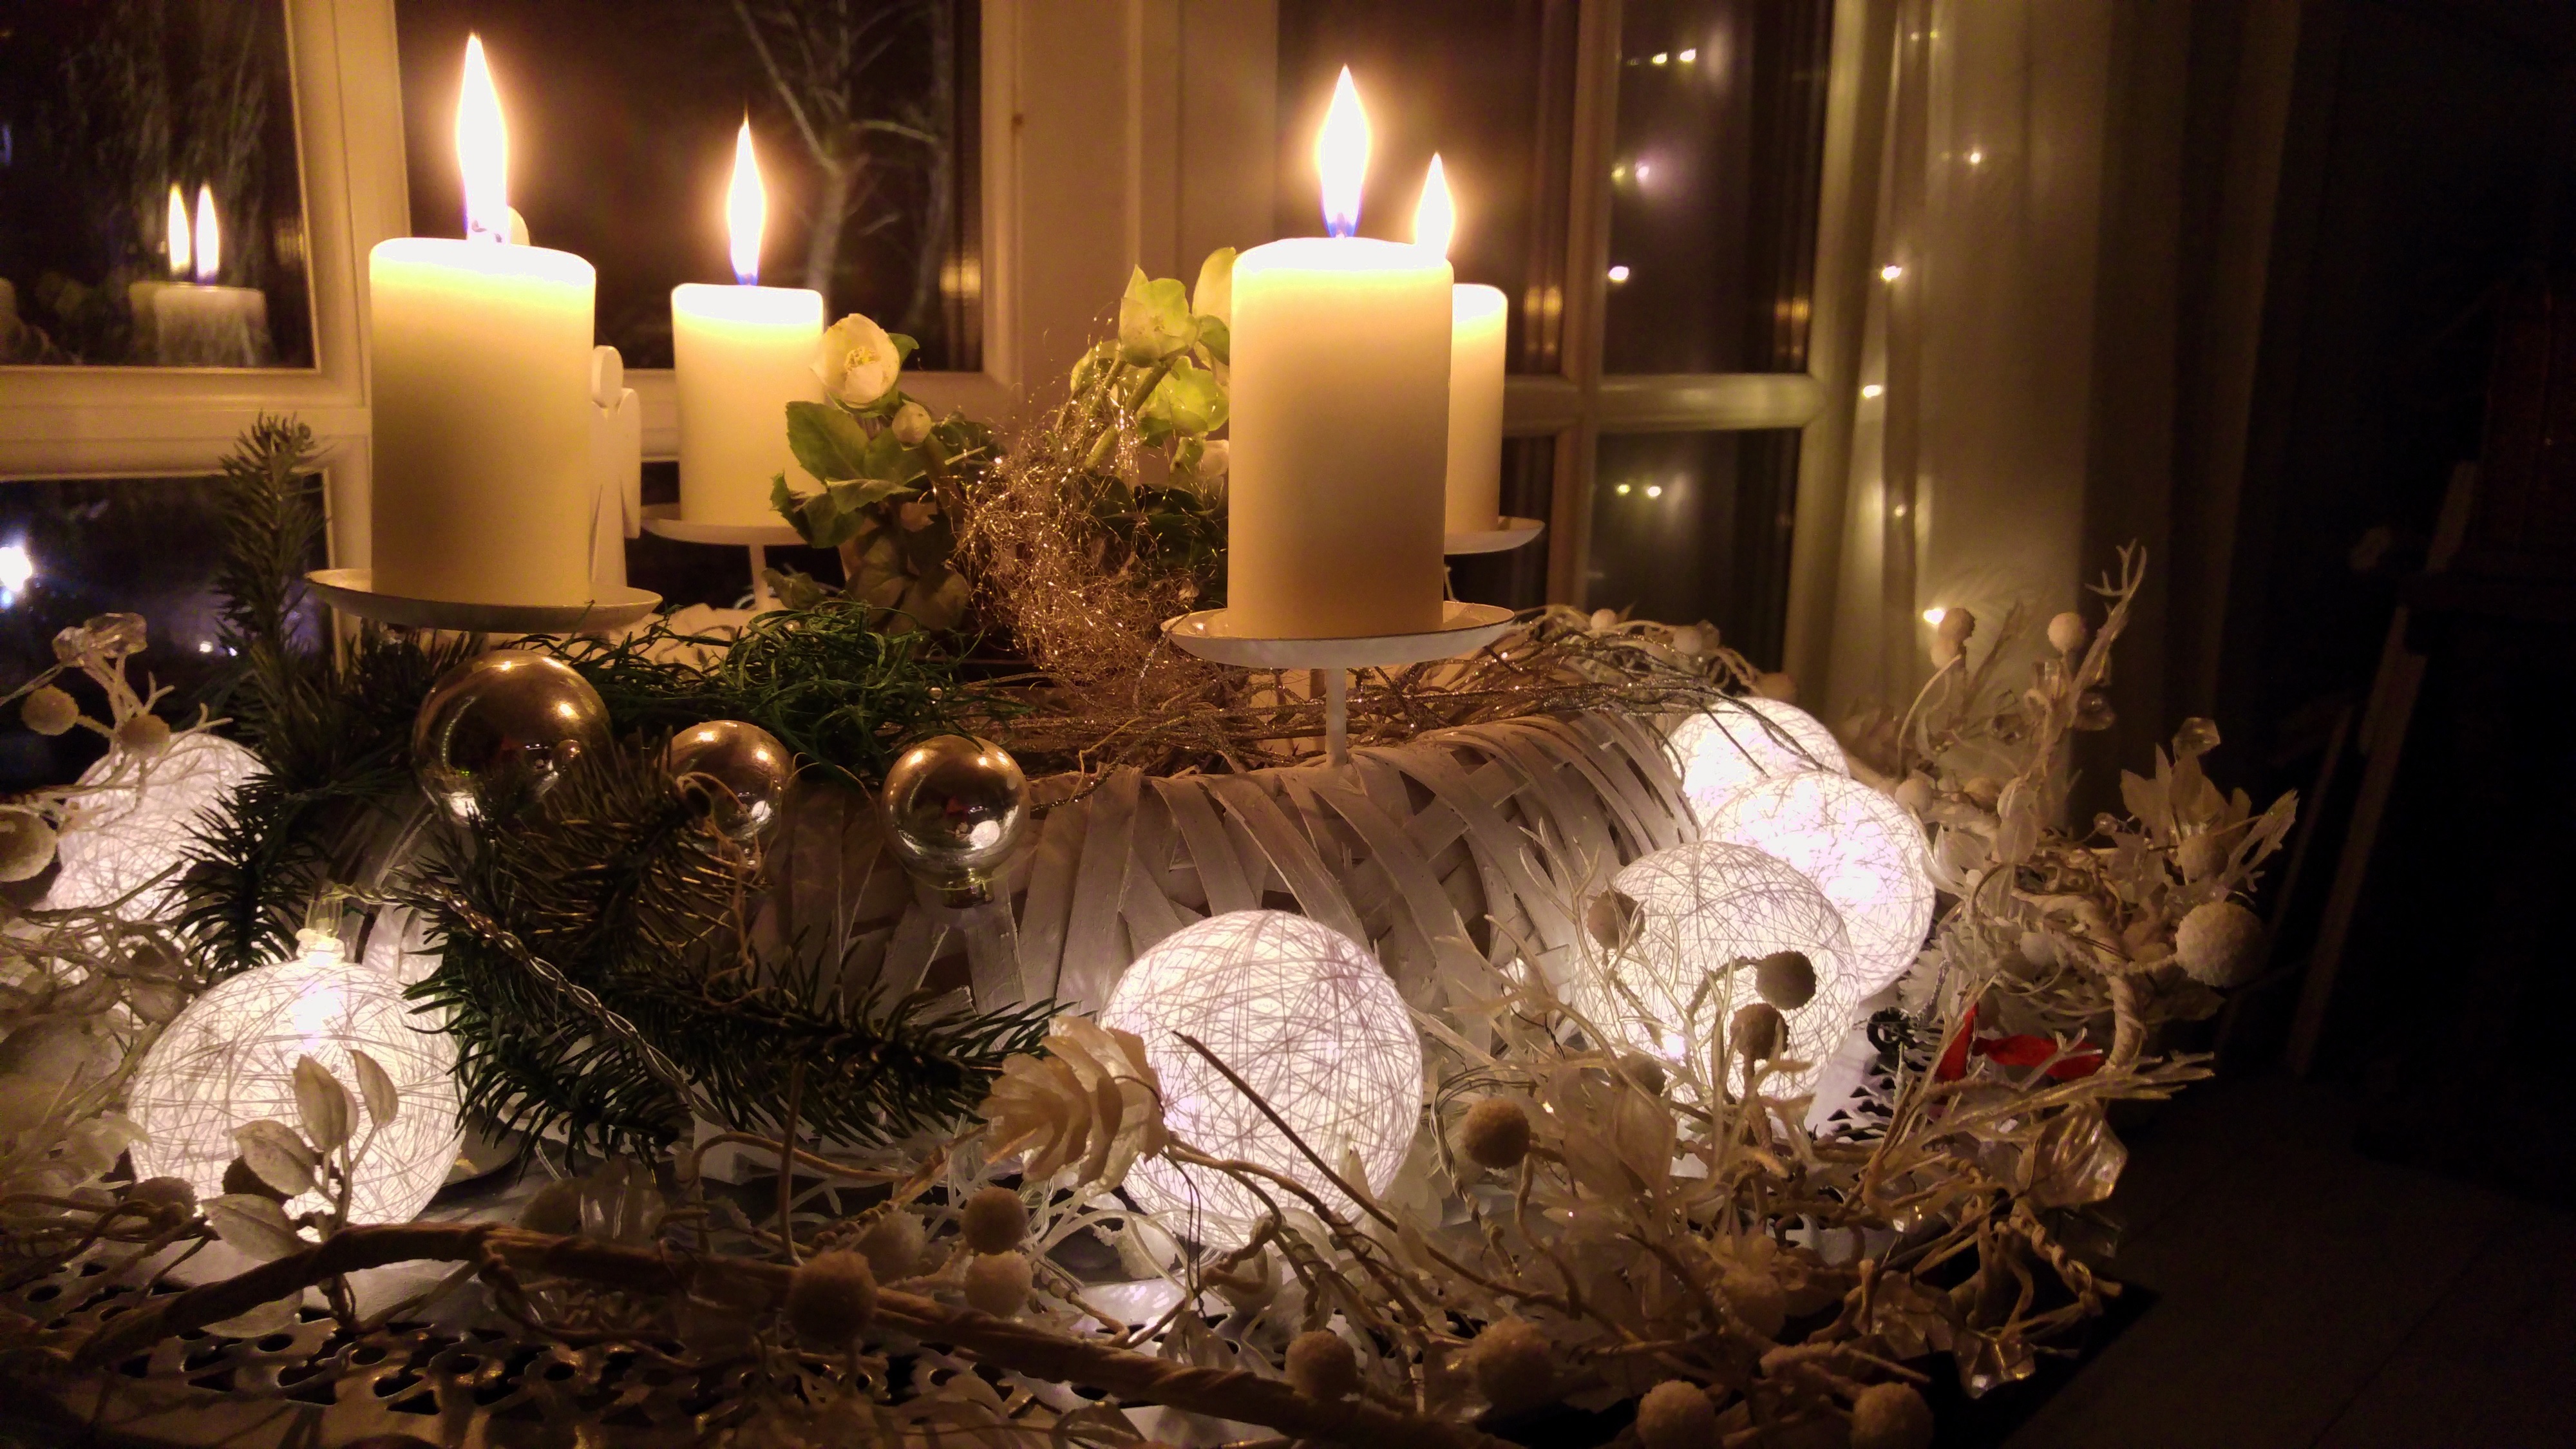 Free Images : winter, lighting, decor, arrangement, christmas ...